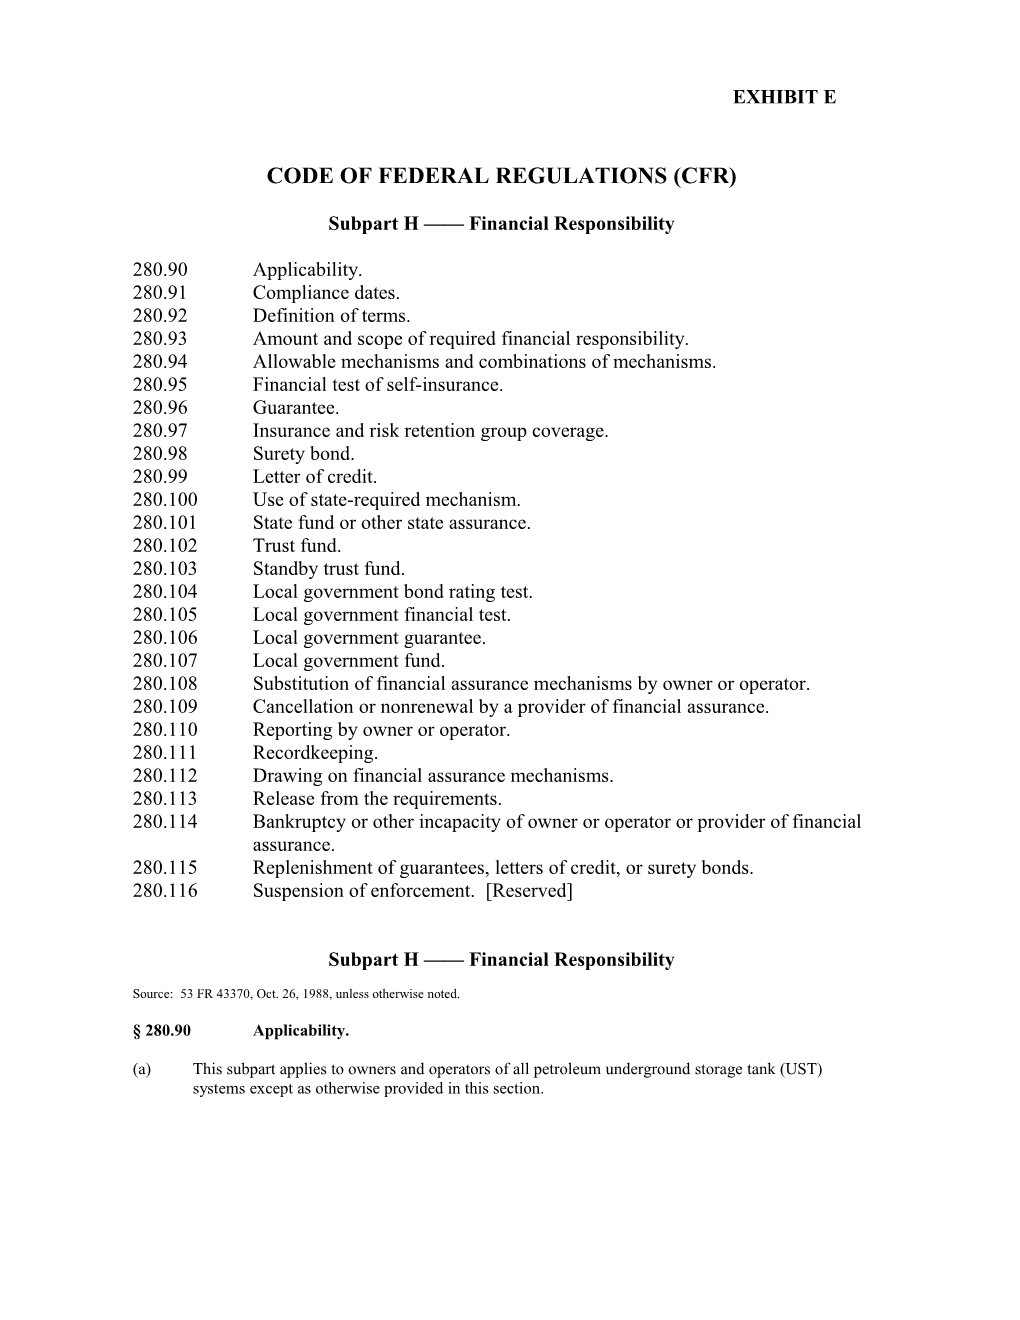 Code of Federal Regulations (Cfr)